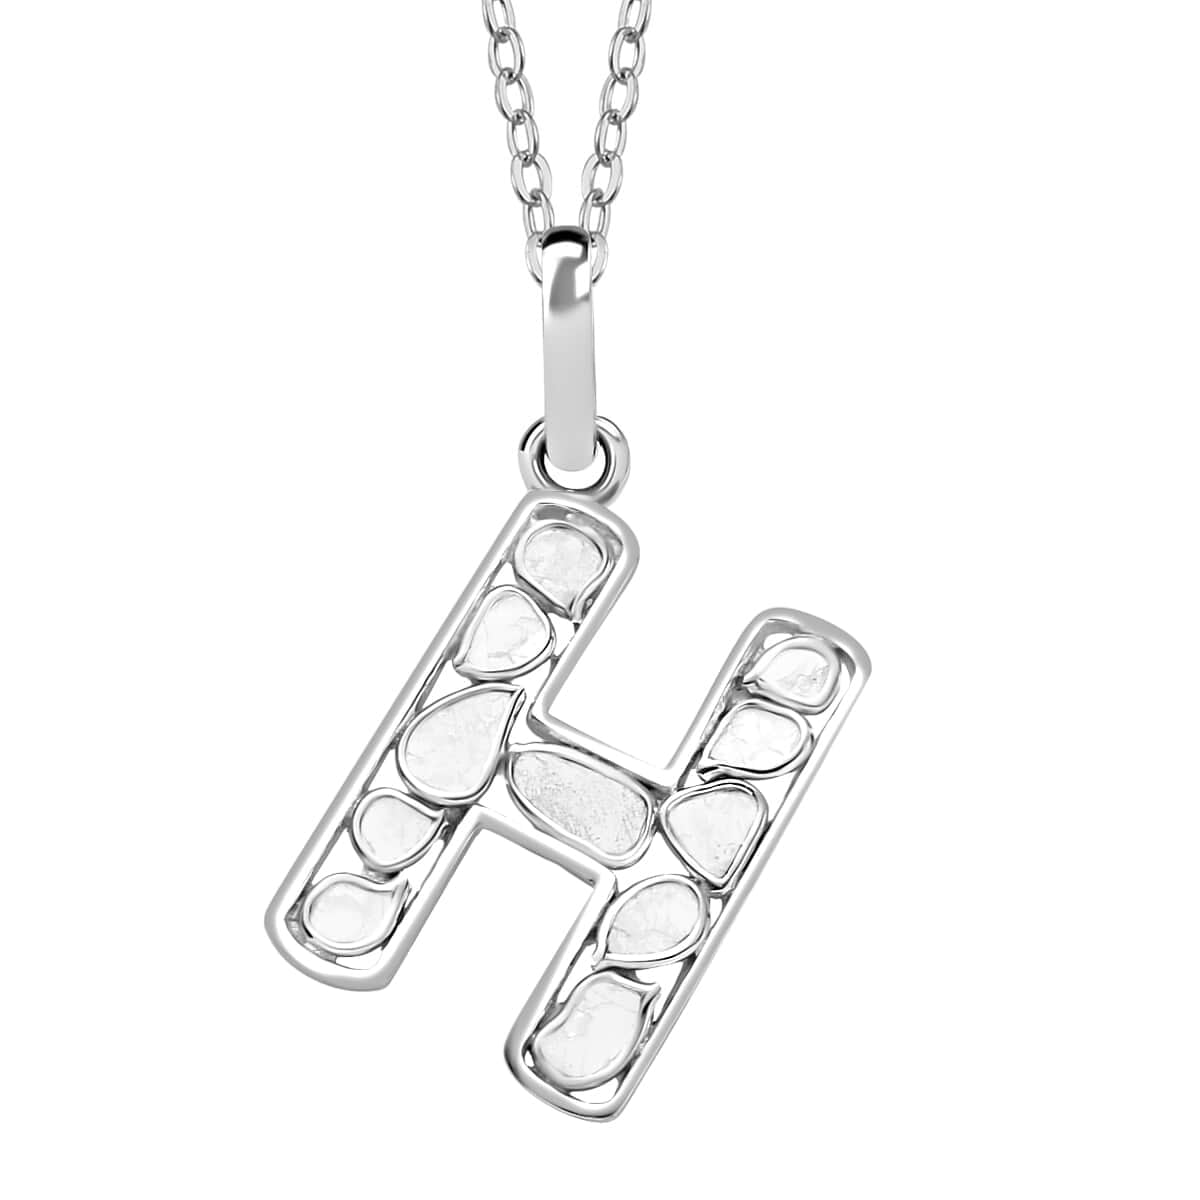 Buy CALANDIS® Fashion Women Heart-shaped Necklace Pendant Diamond Chain  Jewelry Platinum at Amazon.in